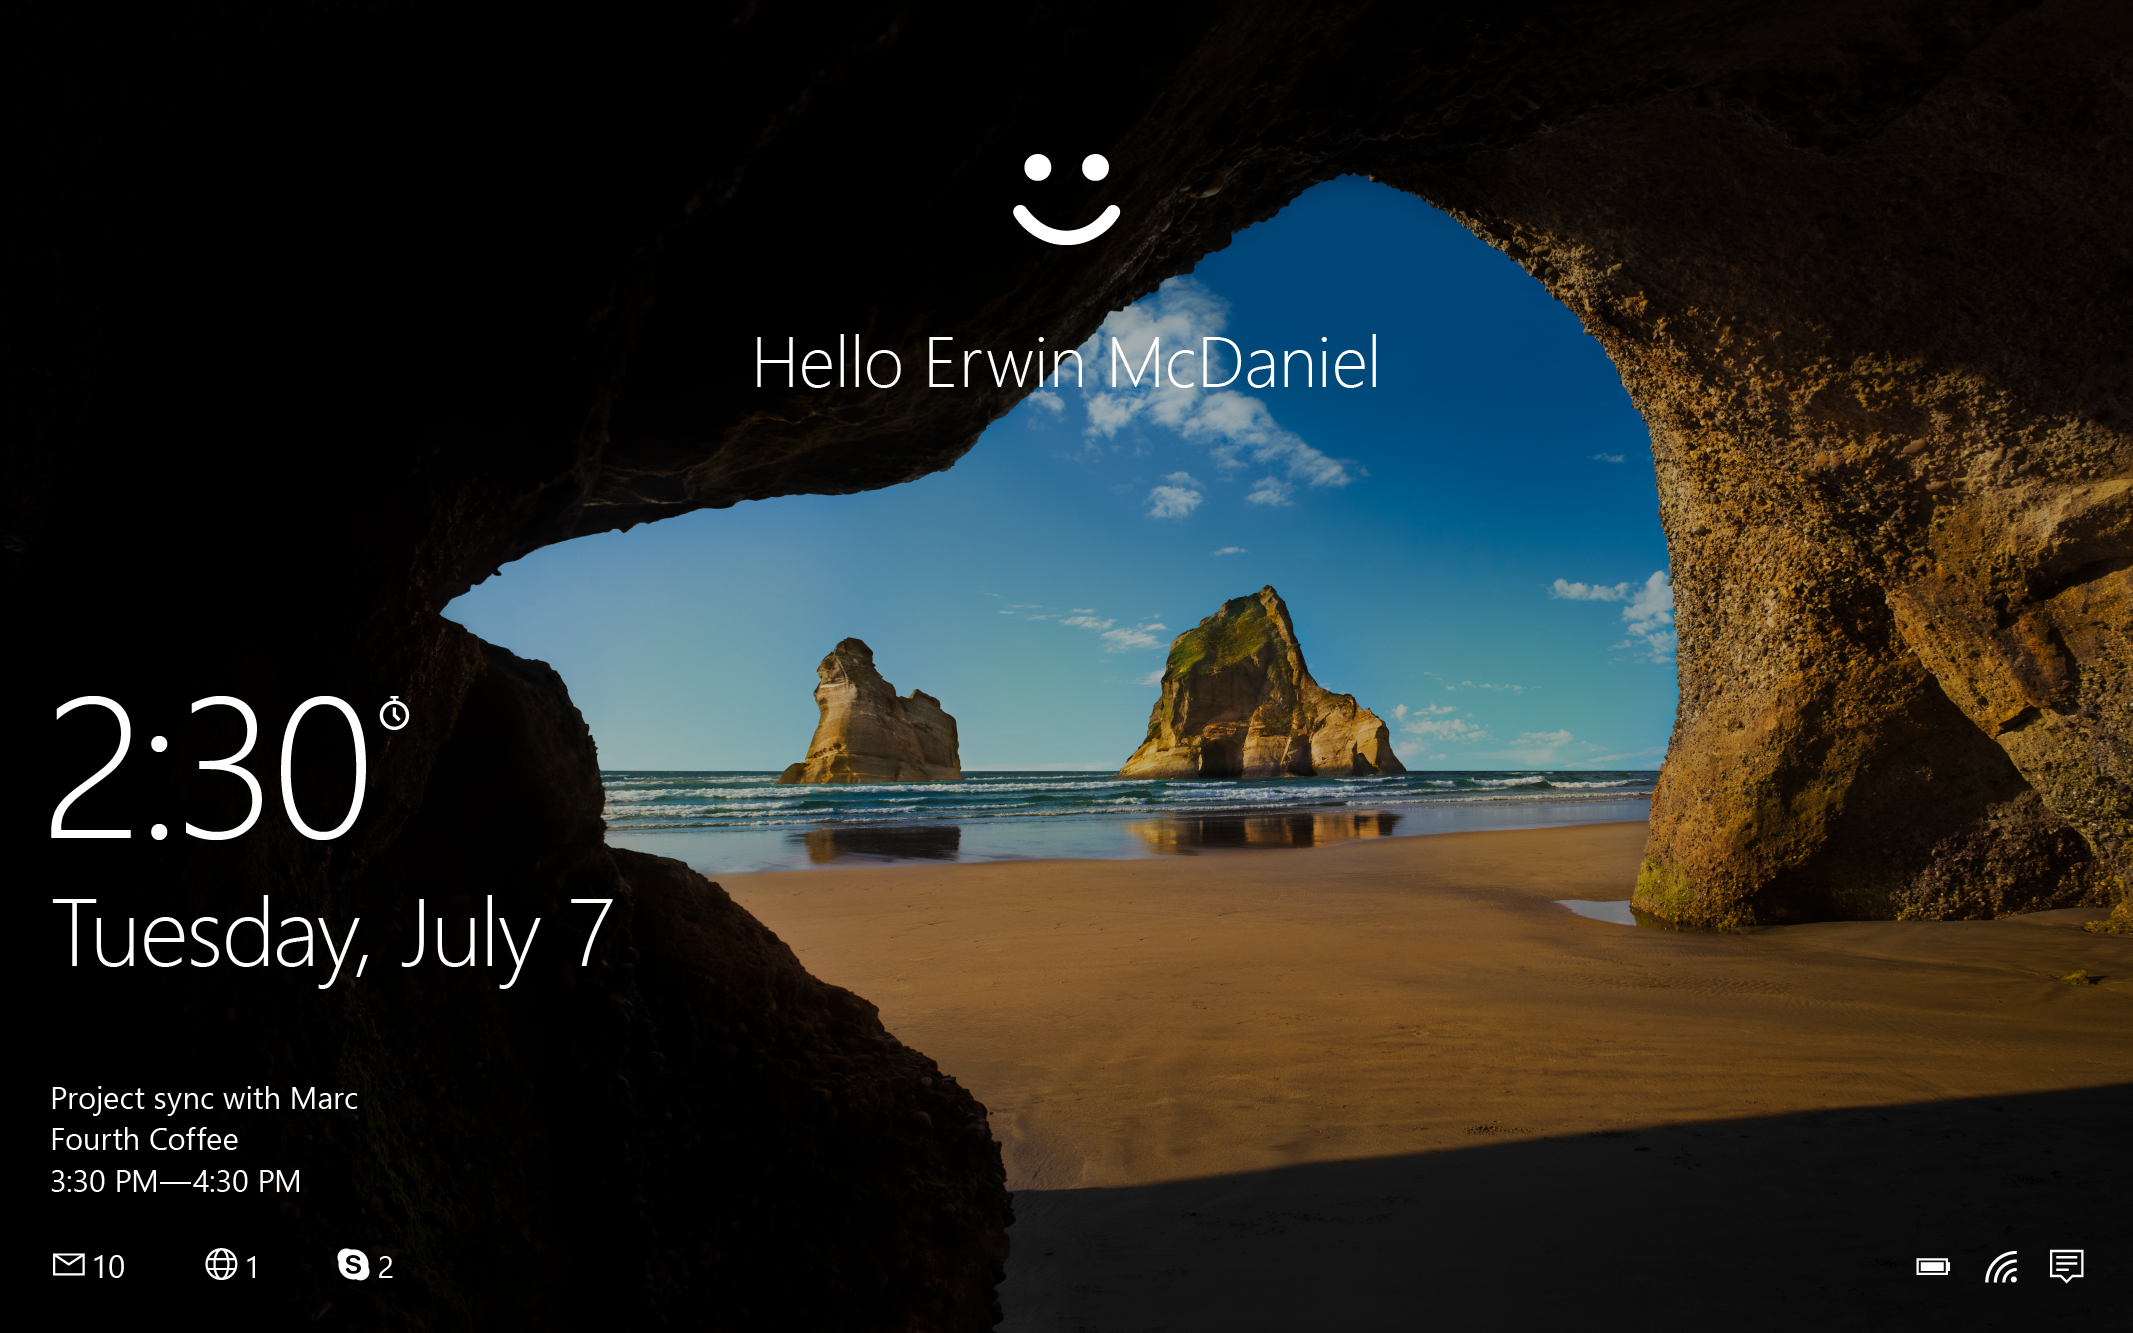 Screen Capture showing Windows Hello on the Windows 10 lock screen